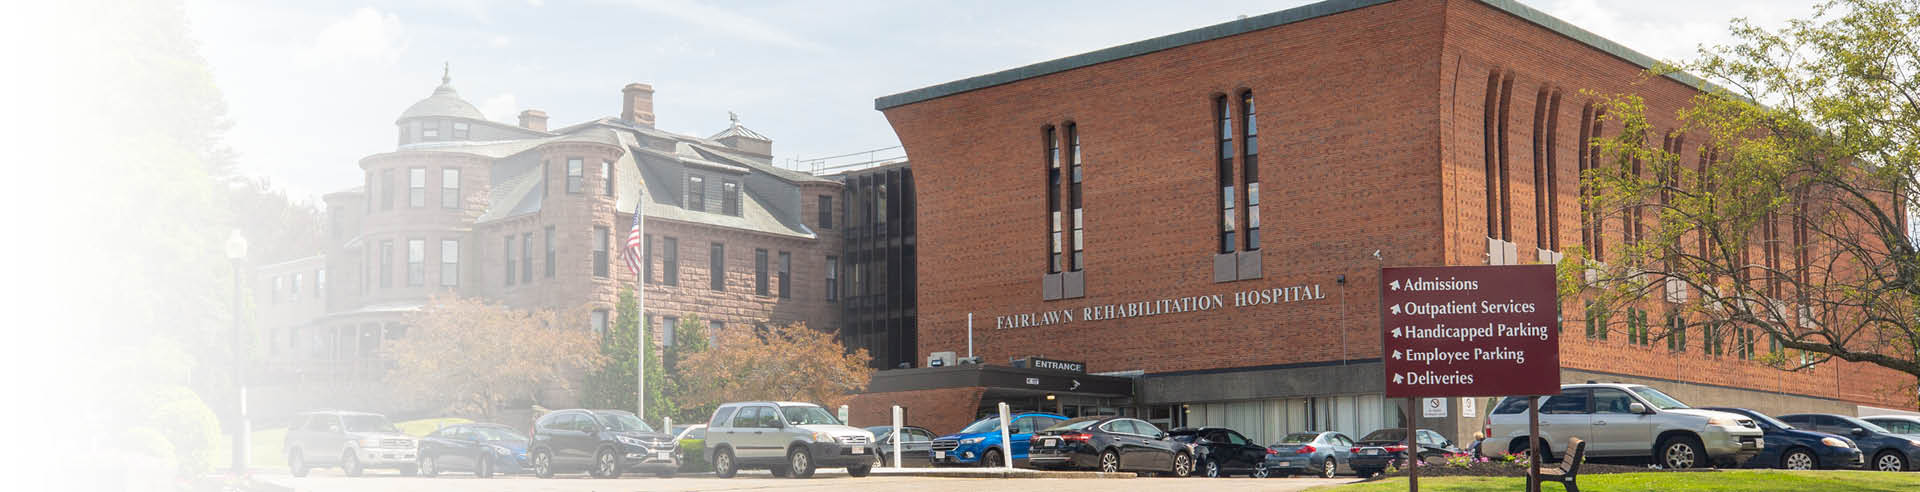 Fairlawn Rehabilitation Hospital exterior